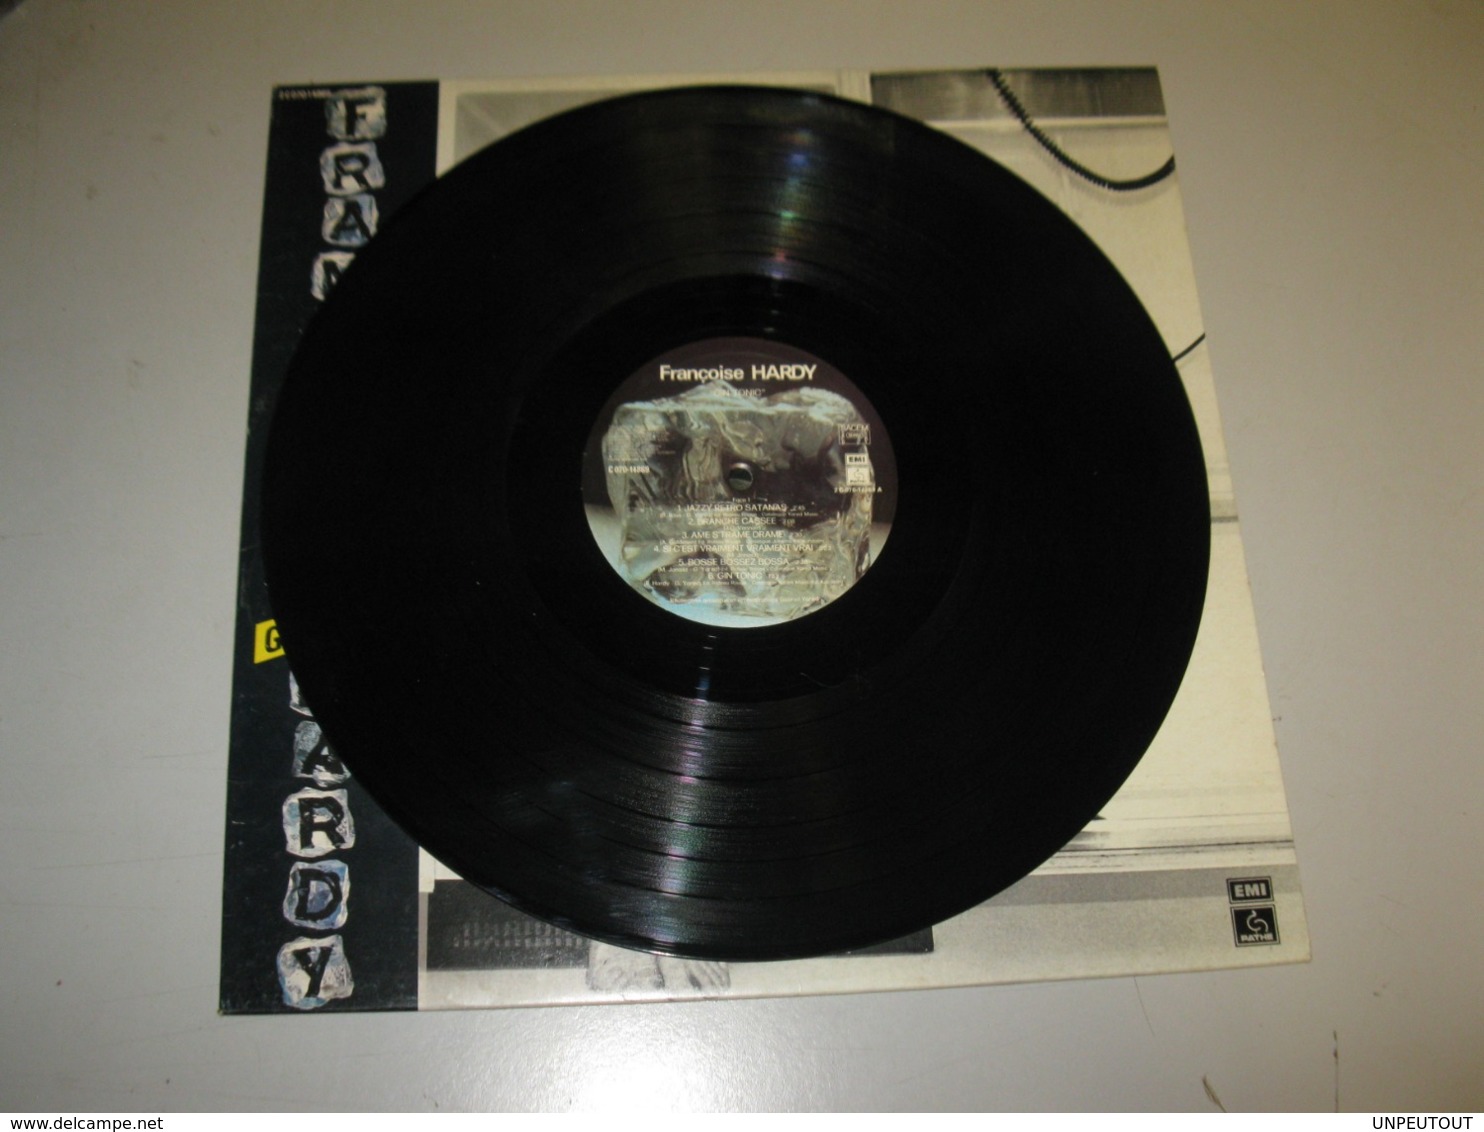 VINYLE FRANCOISE HARDY "GIN TONIC" 33 T PATHE / EMI (1980) - Altri - Francese